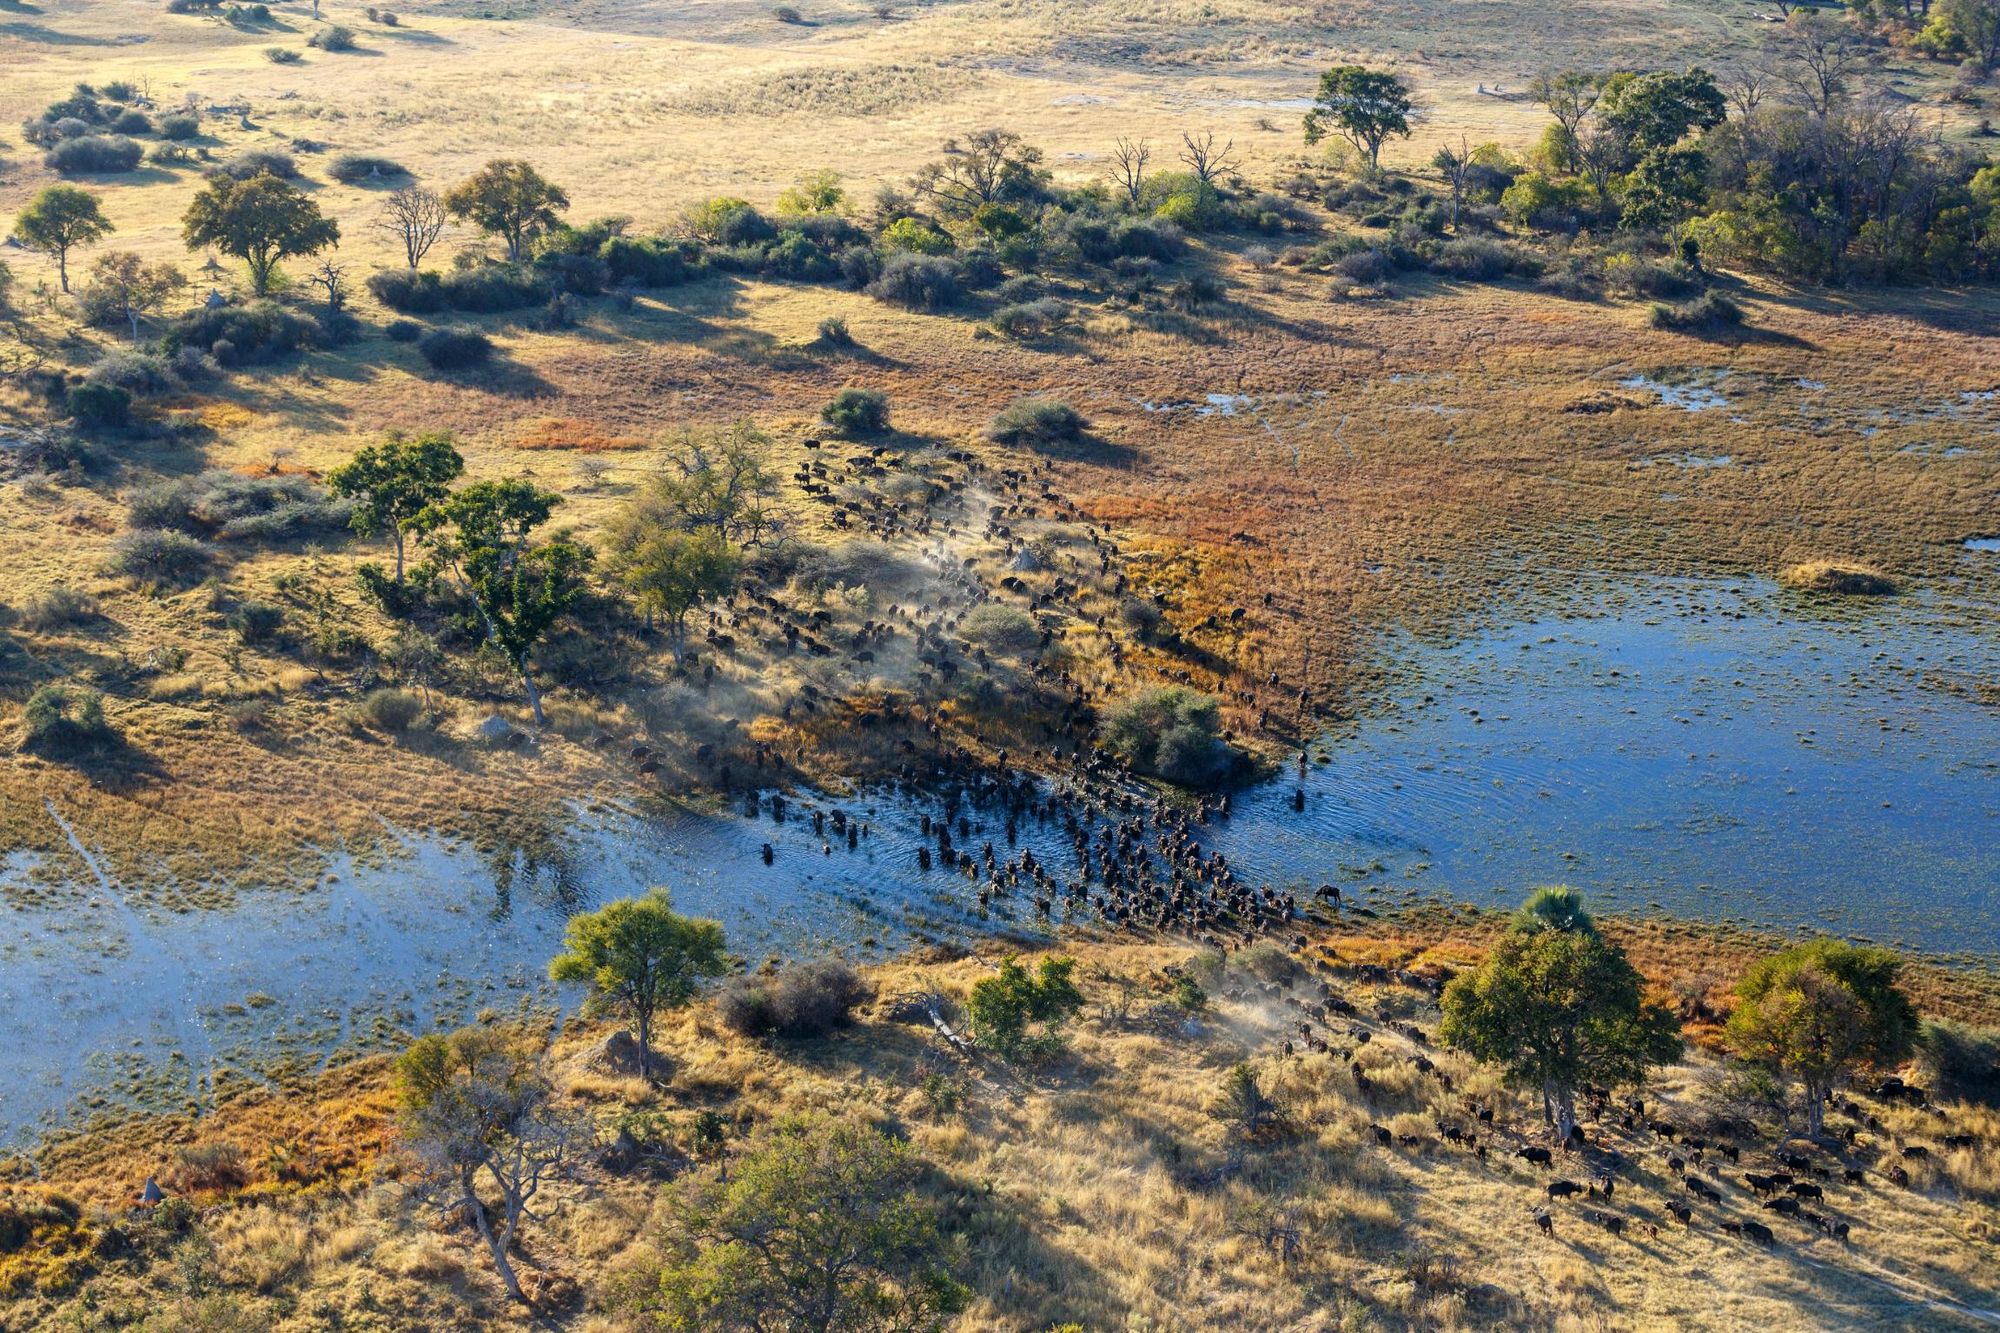 The sprawling life of the Okavango Delta. Photo: Getty